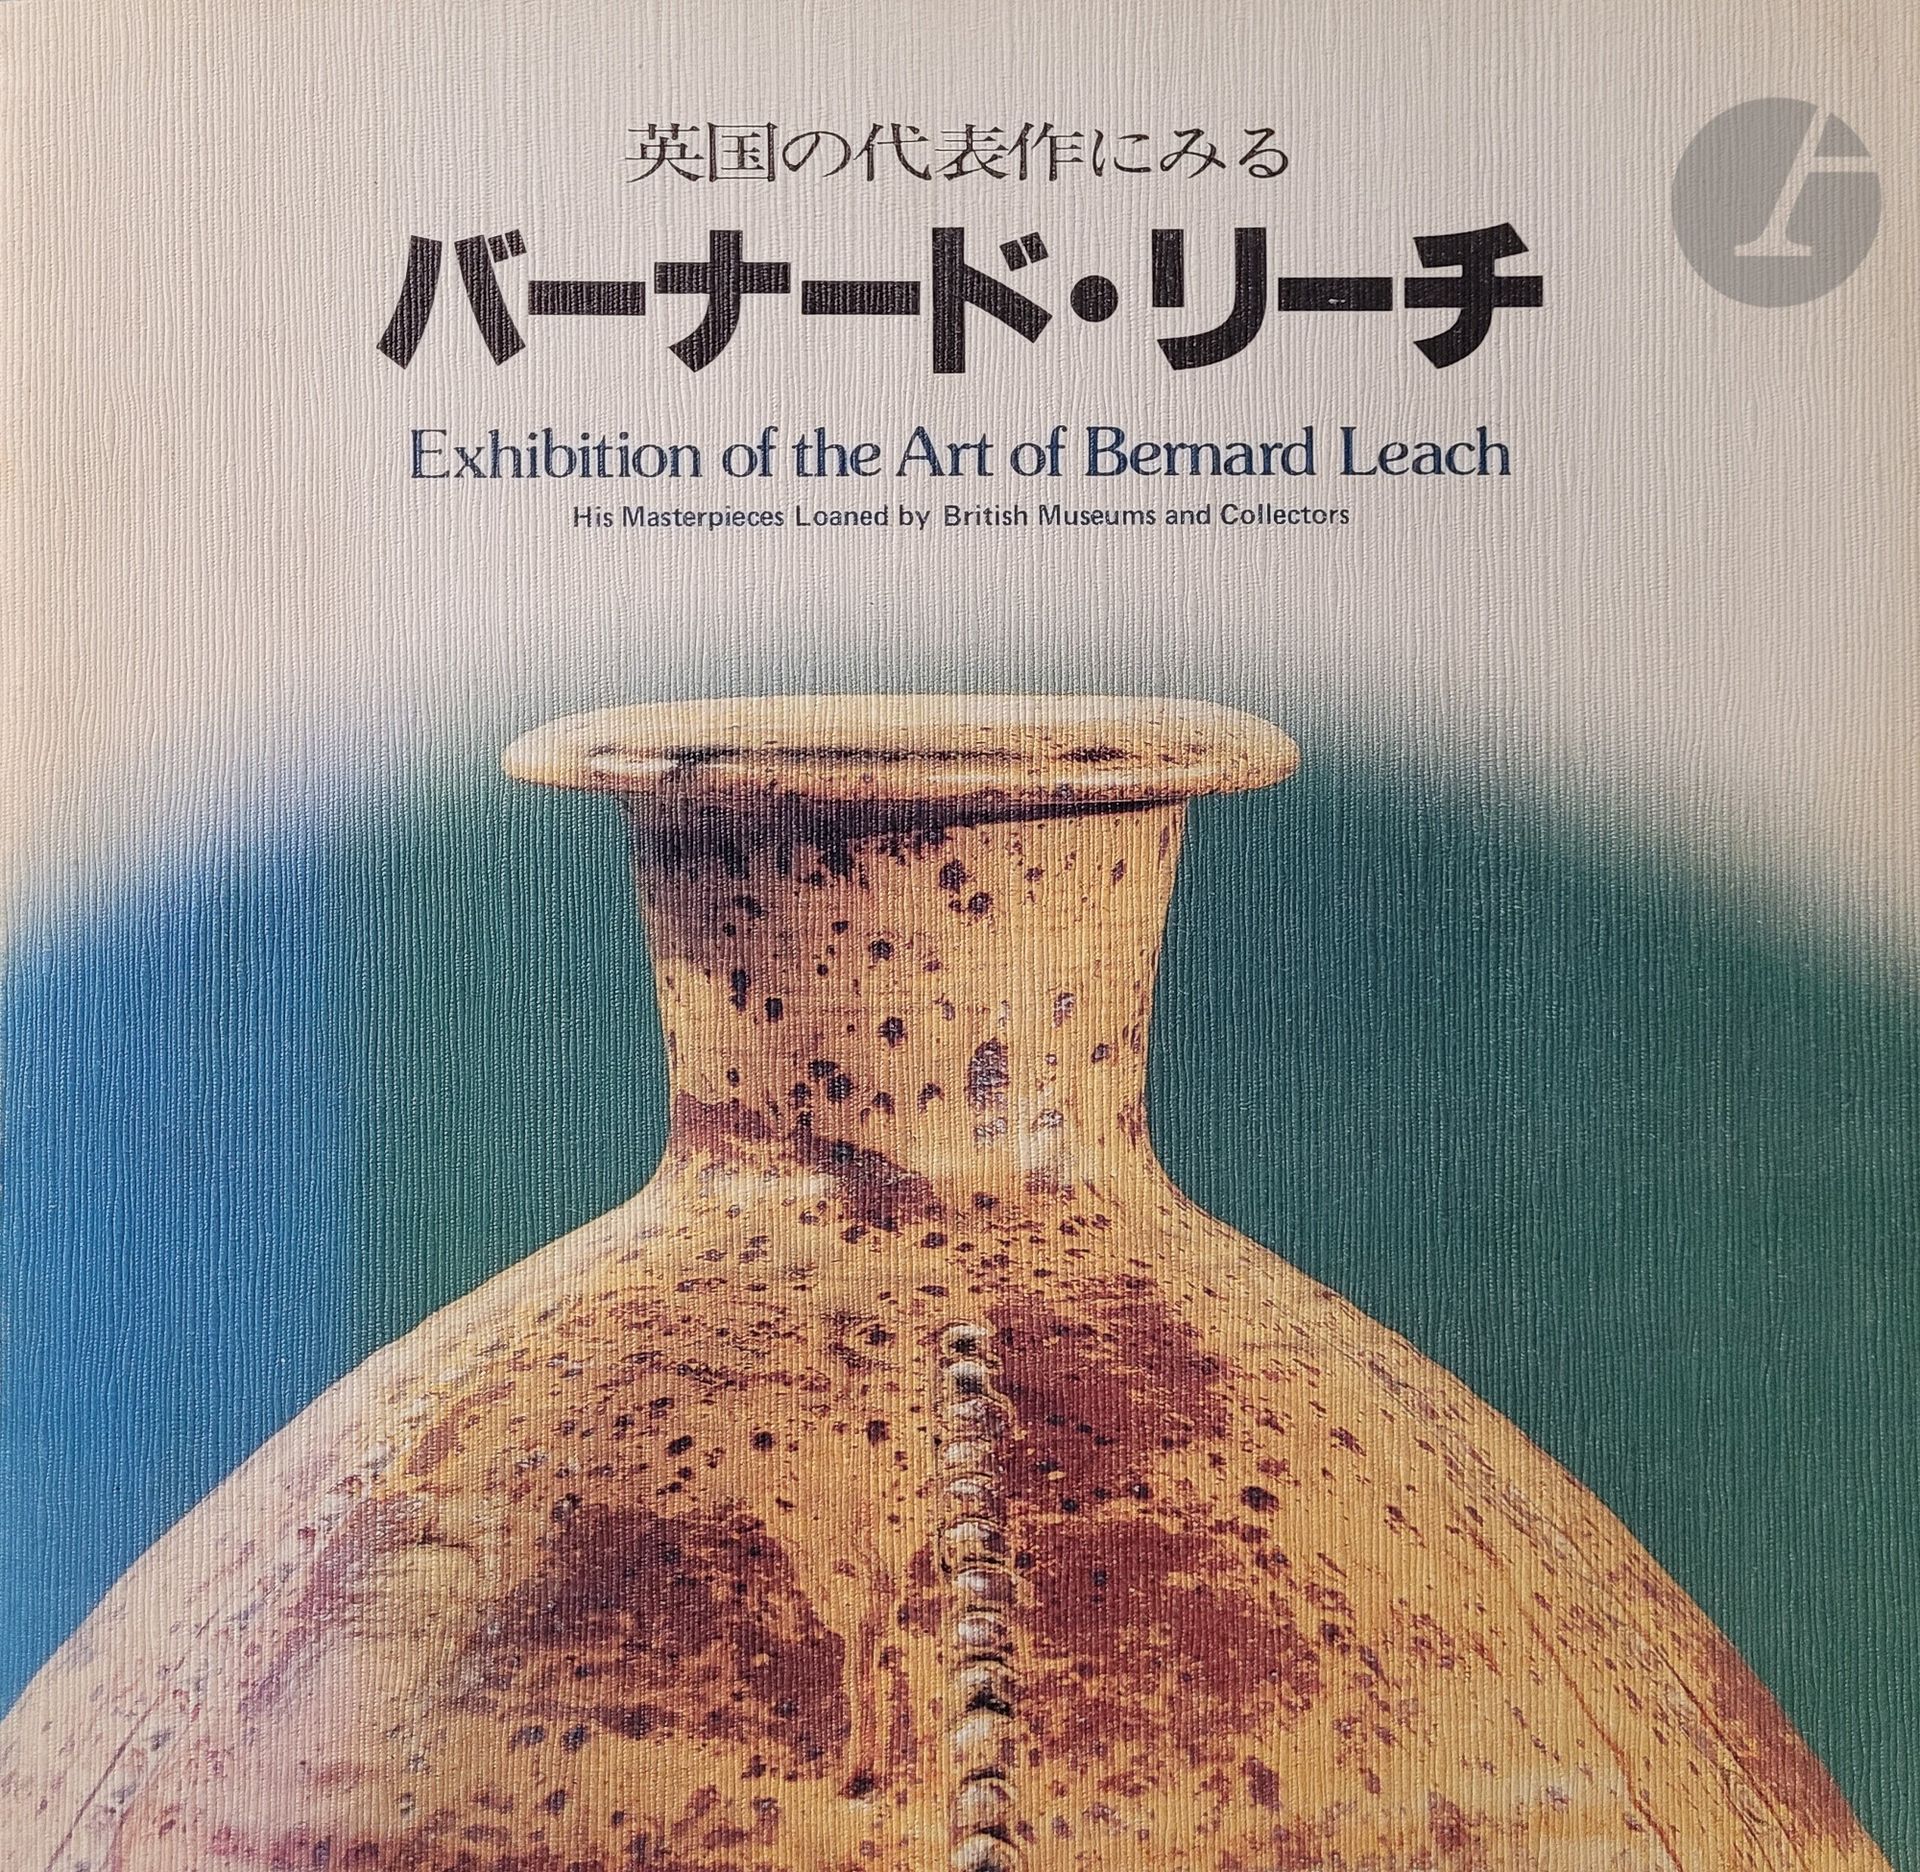 Null 日本 - 陶瓷]
11本书:
- 日本南部的陶瓷杰作。田中丸基金会收藏的茶器和瓷器，佳士得的书。
- 清水宇一。一个日本陶艺家，活着的国宝。
伯纳德-&hellip;